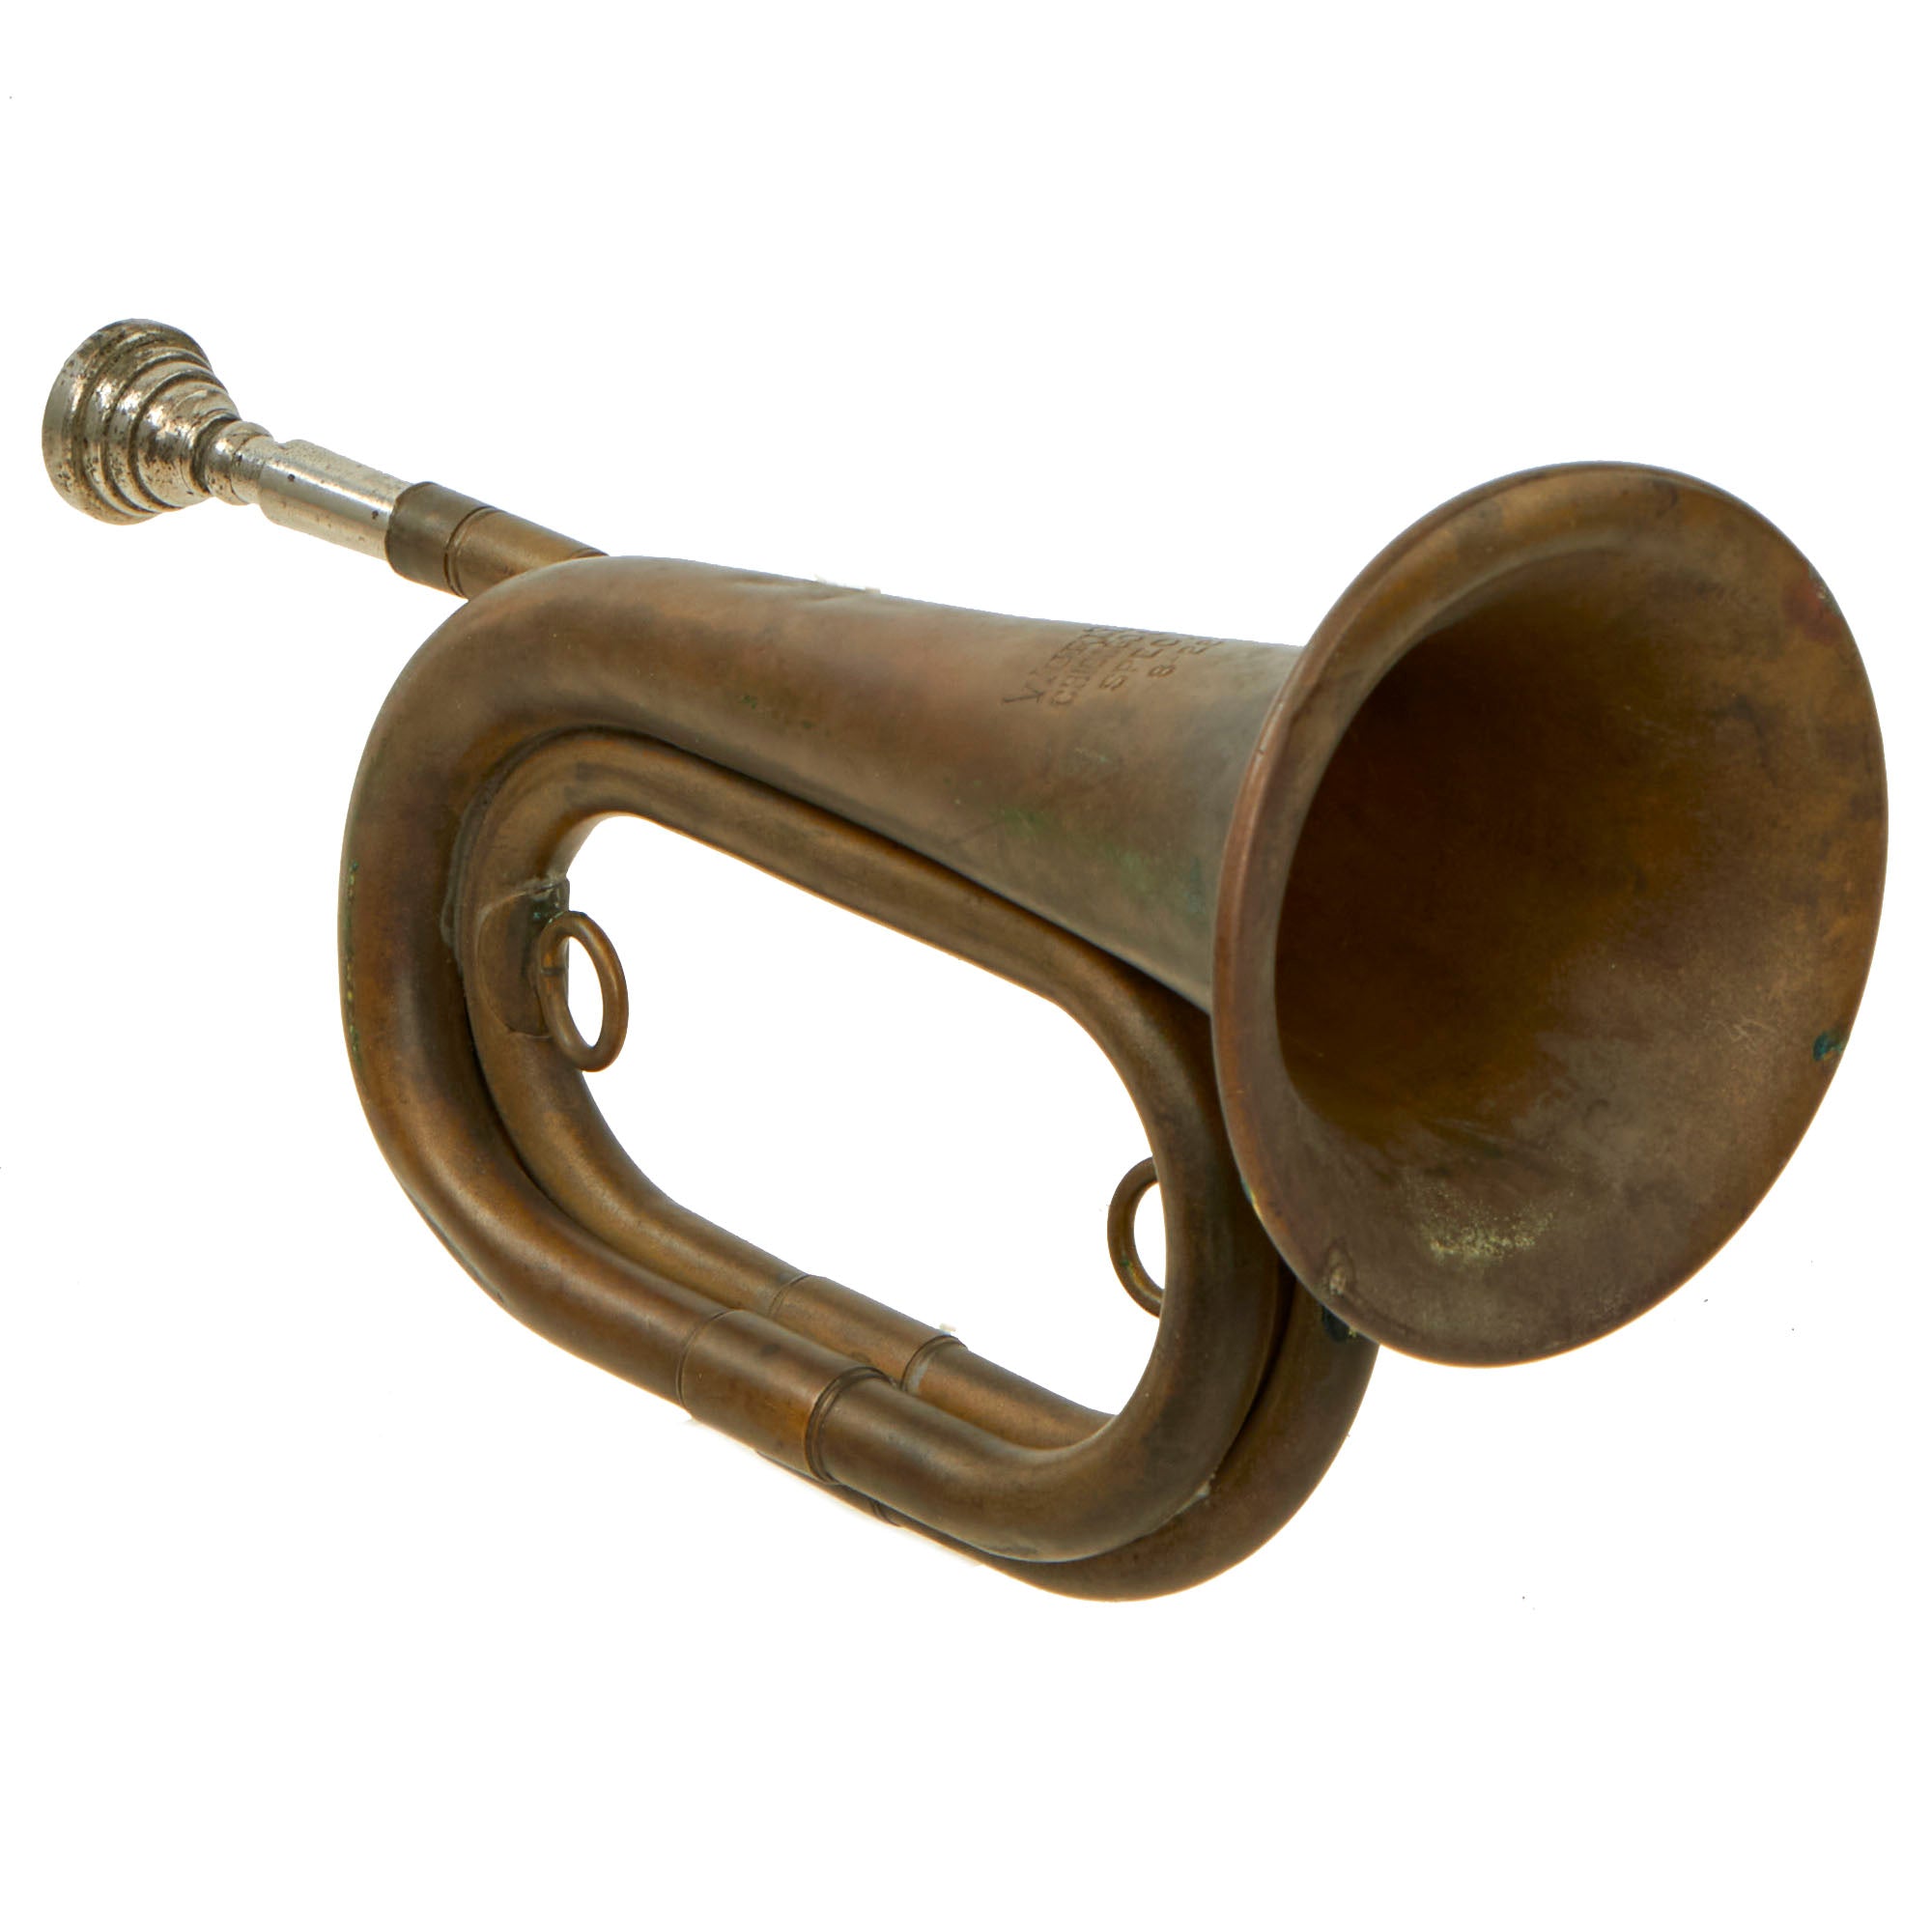 Original U.S. WWI 1917 dated Military Brass Bugle by Wurlitzer